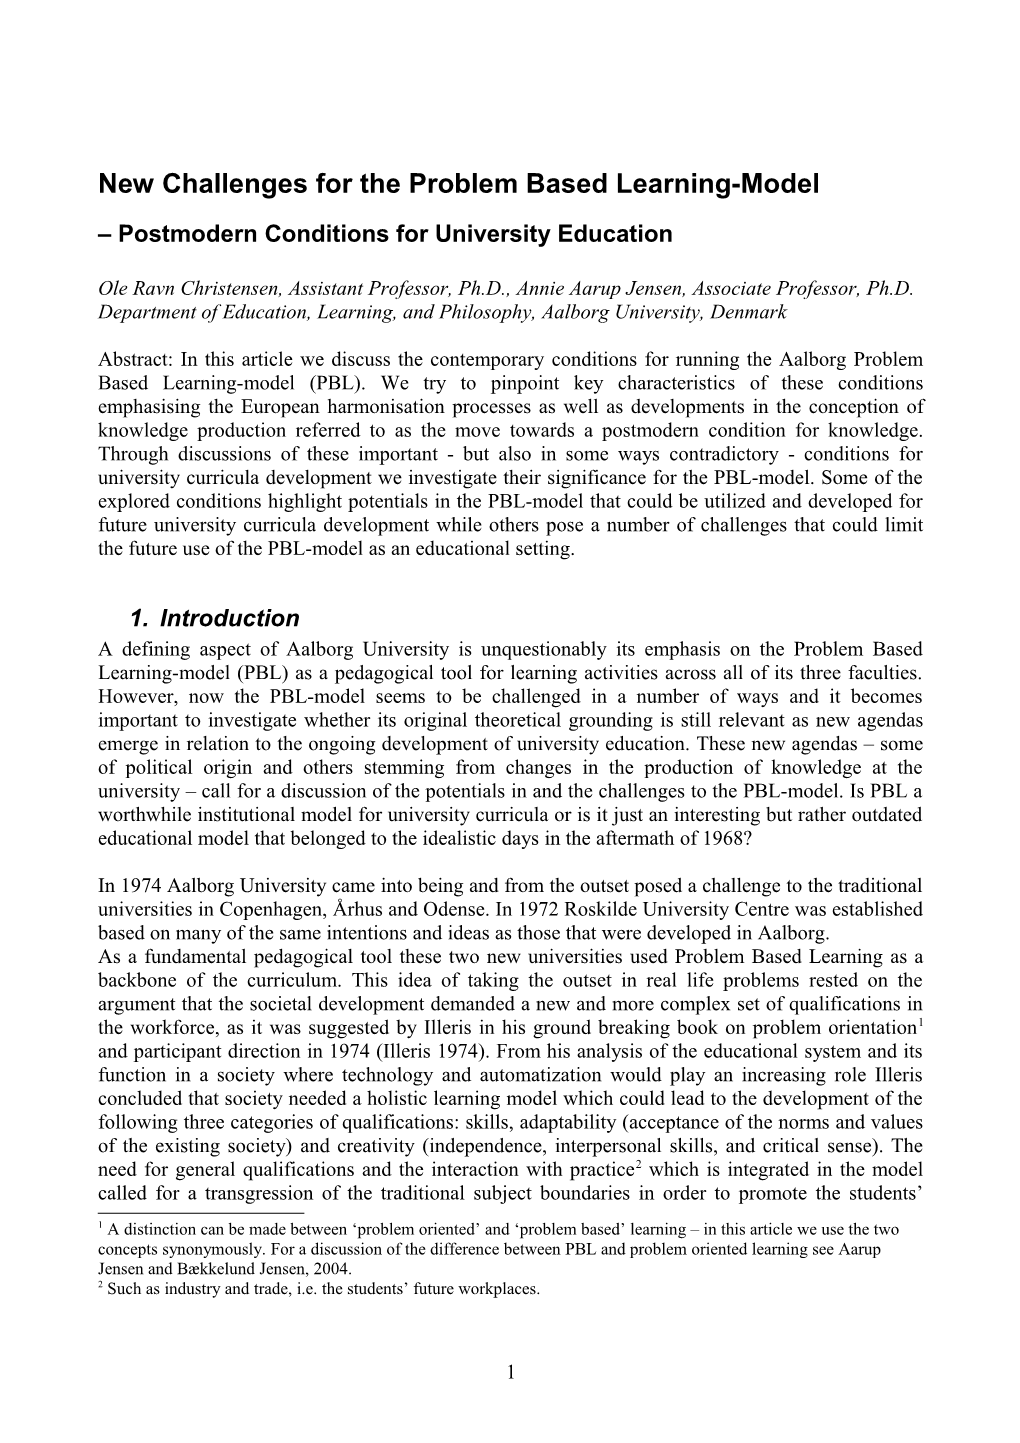 Postmodern Curriculum Development at University/In University Education